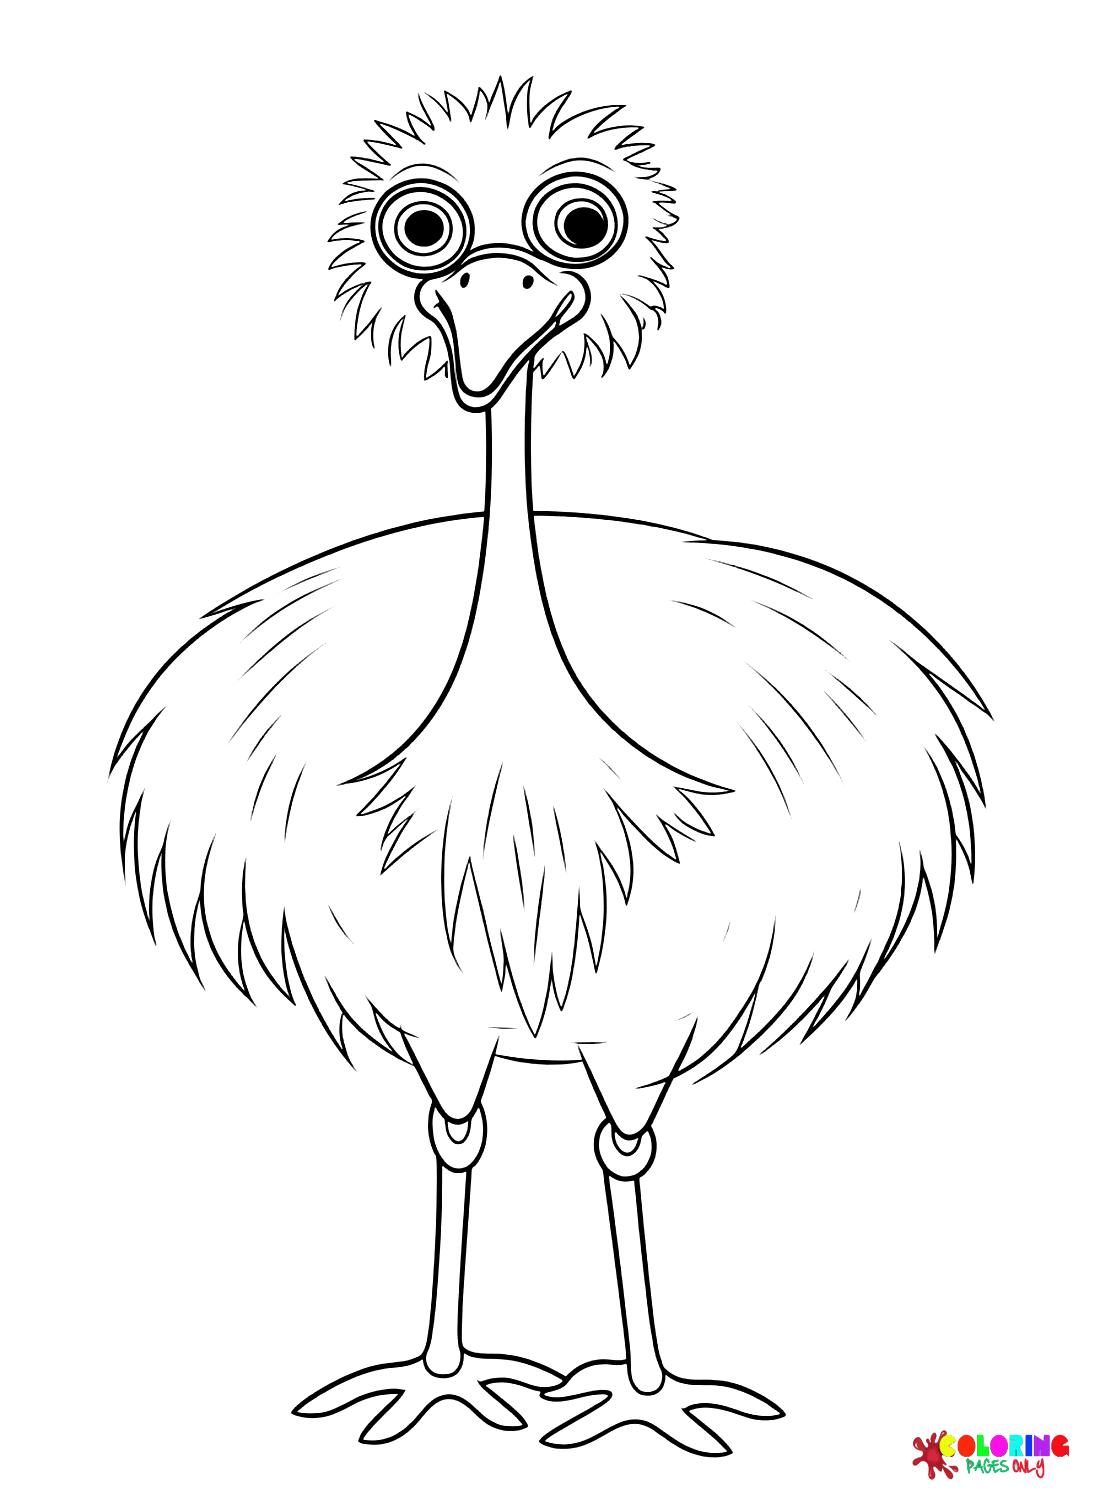 Emu Bird Images from Emu